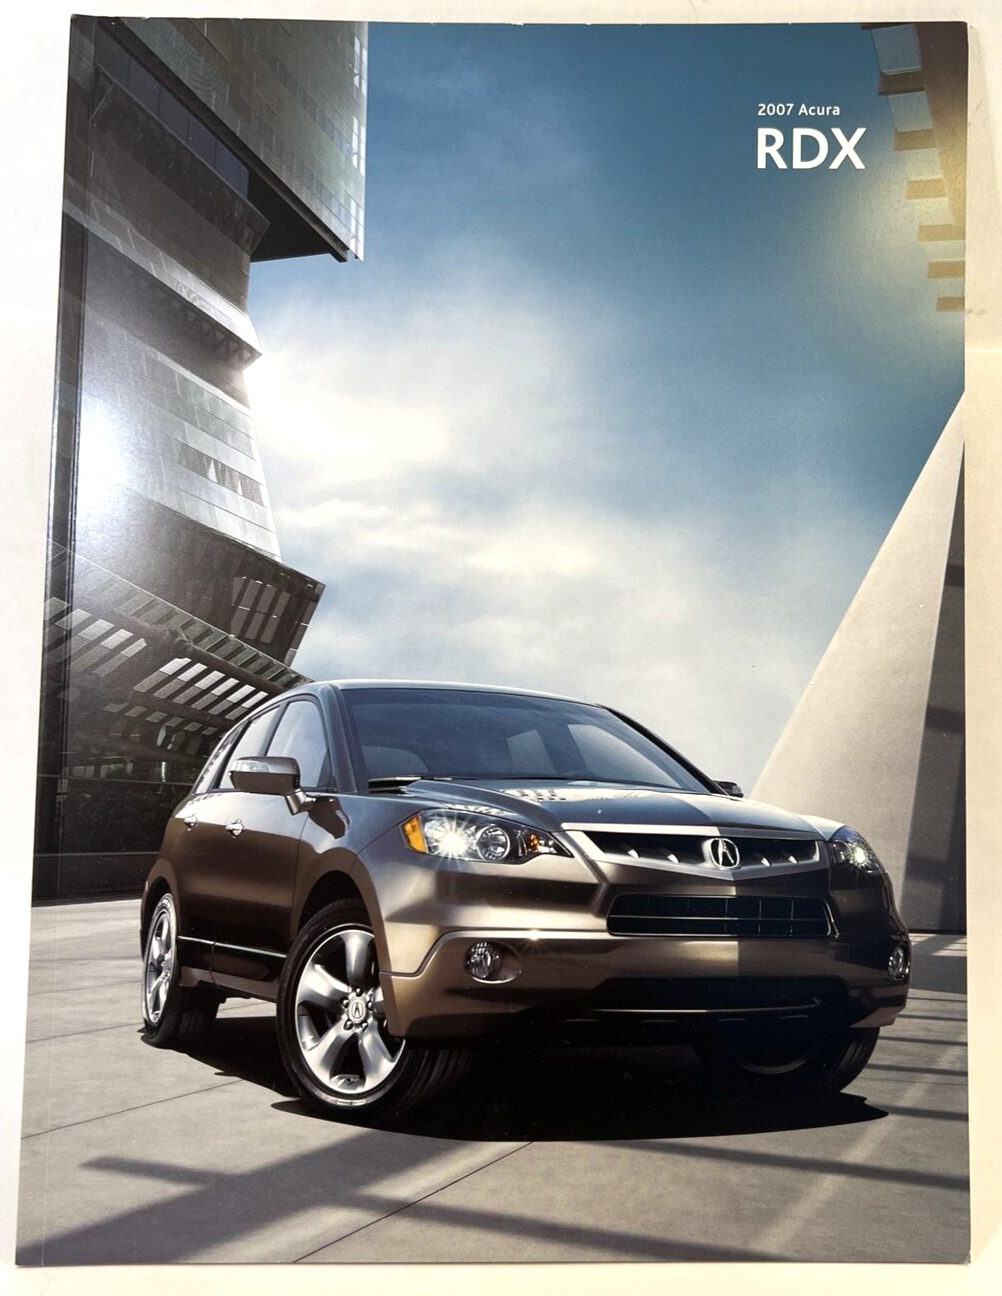 2007 Acura RDX Full Color Sales Brochure VGC